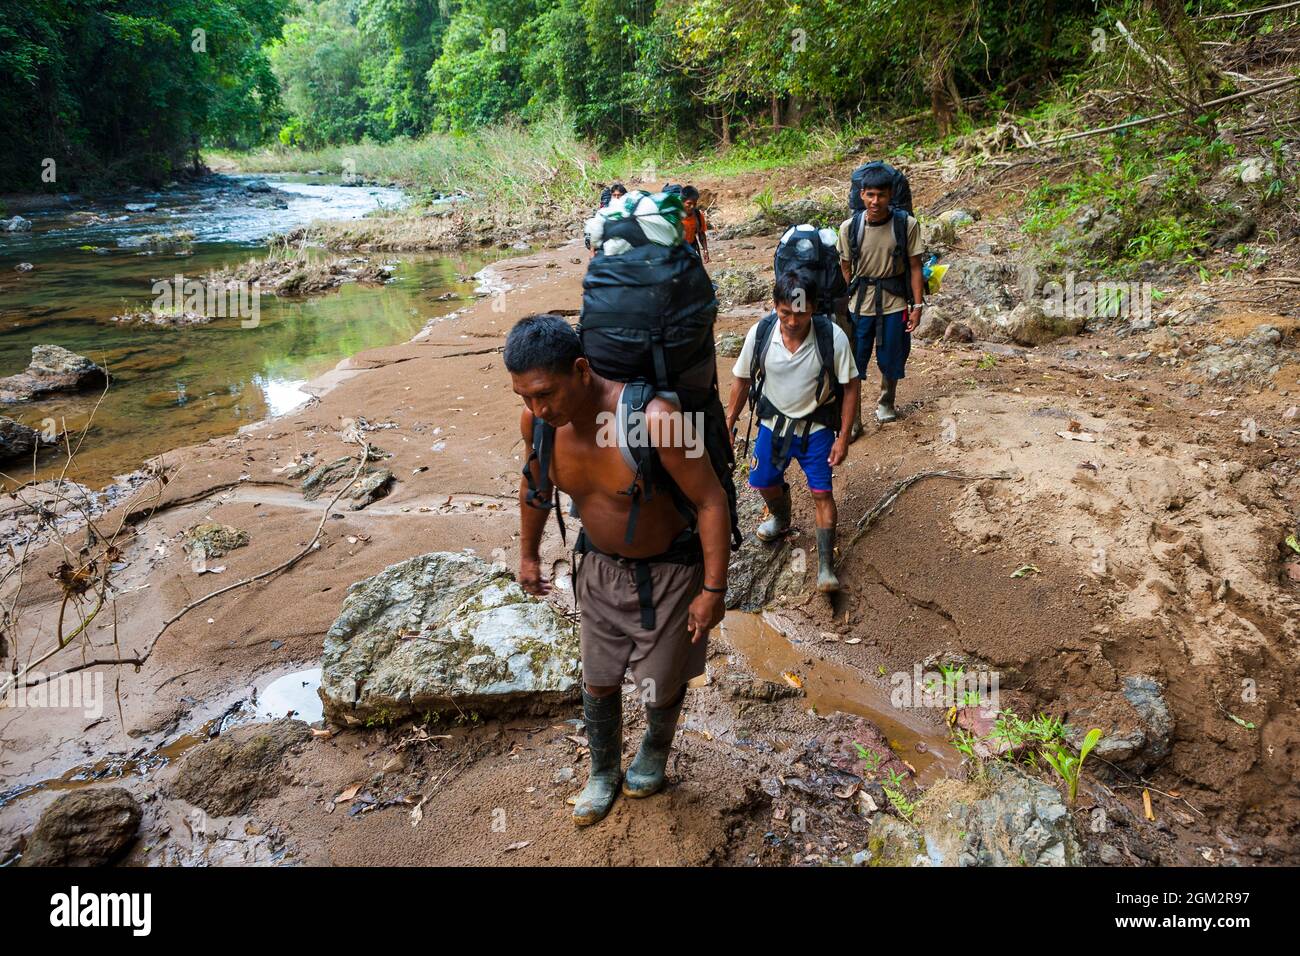 Die Wanderer der Embera-indianer wandern entlang des alten Camino Real-Pfades, des Chagres-Nationalparks, der Republik Panama, Mittelamerika. Stockfoto